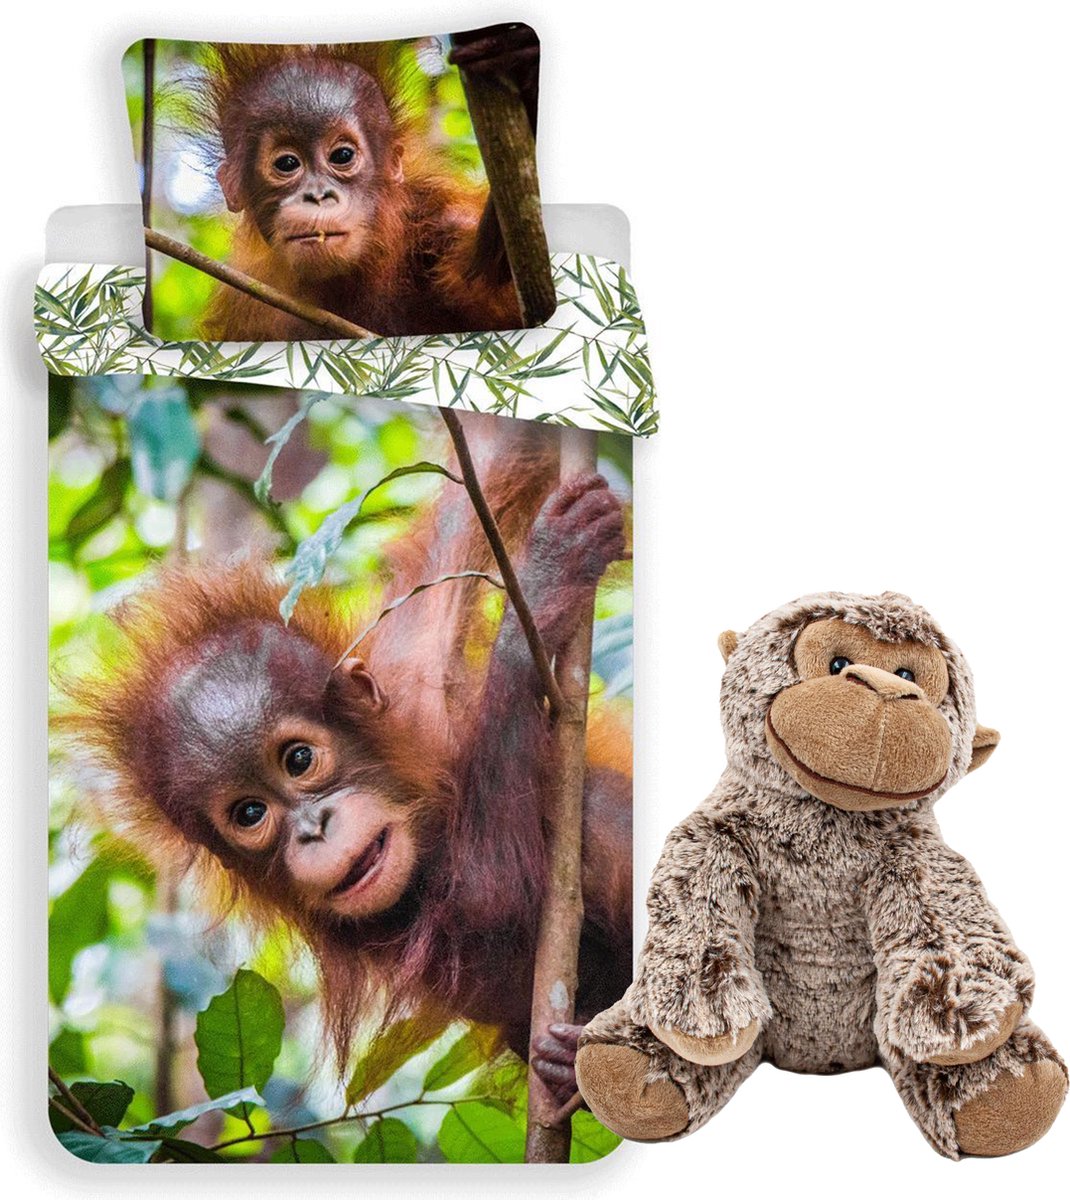 Dekbedovertrek Orang Oetan baby- 140x200cm- katoen- incl. knuffel Aap 22 cm